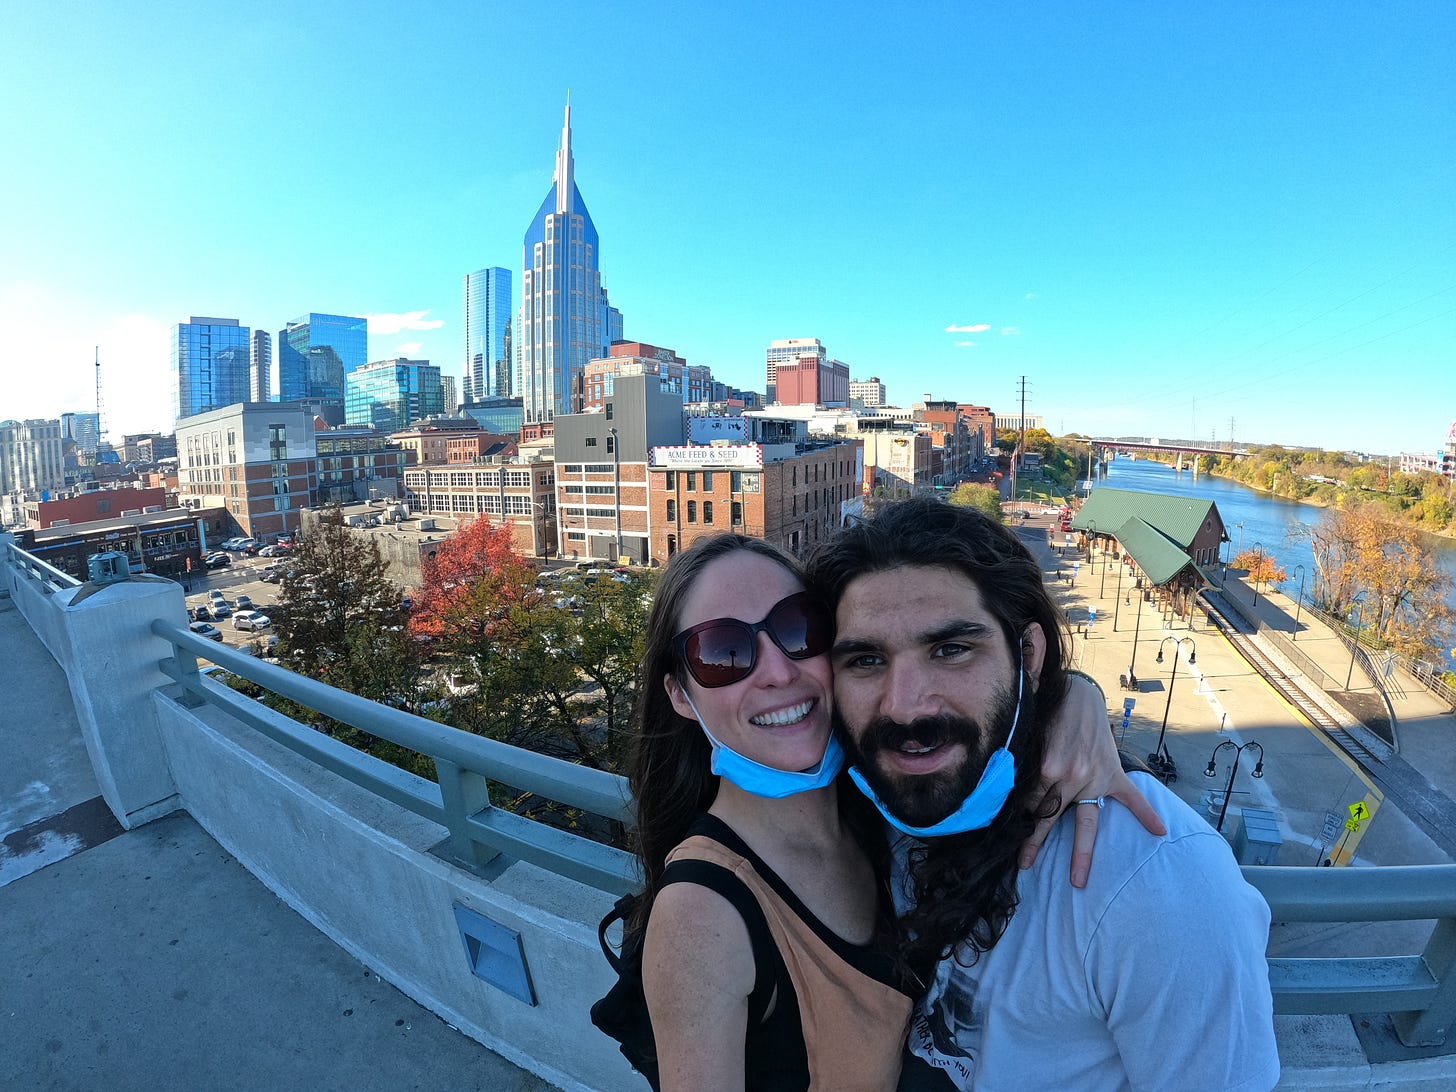 Anthony & Kelly selfie on the walking bridge overlooking the Cumberland River & Nashville, TN